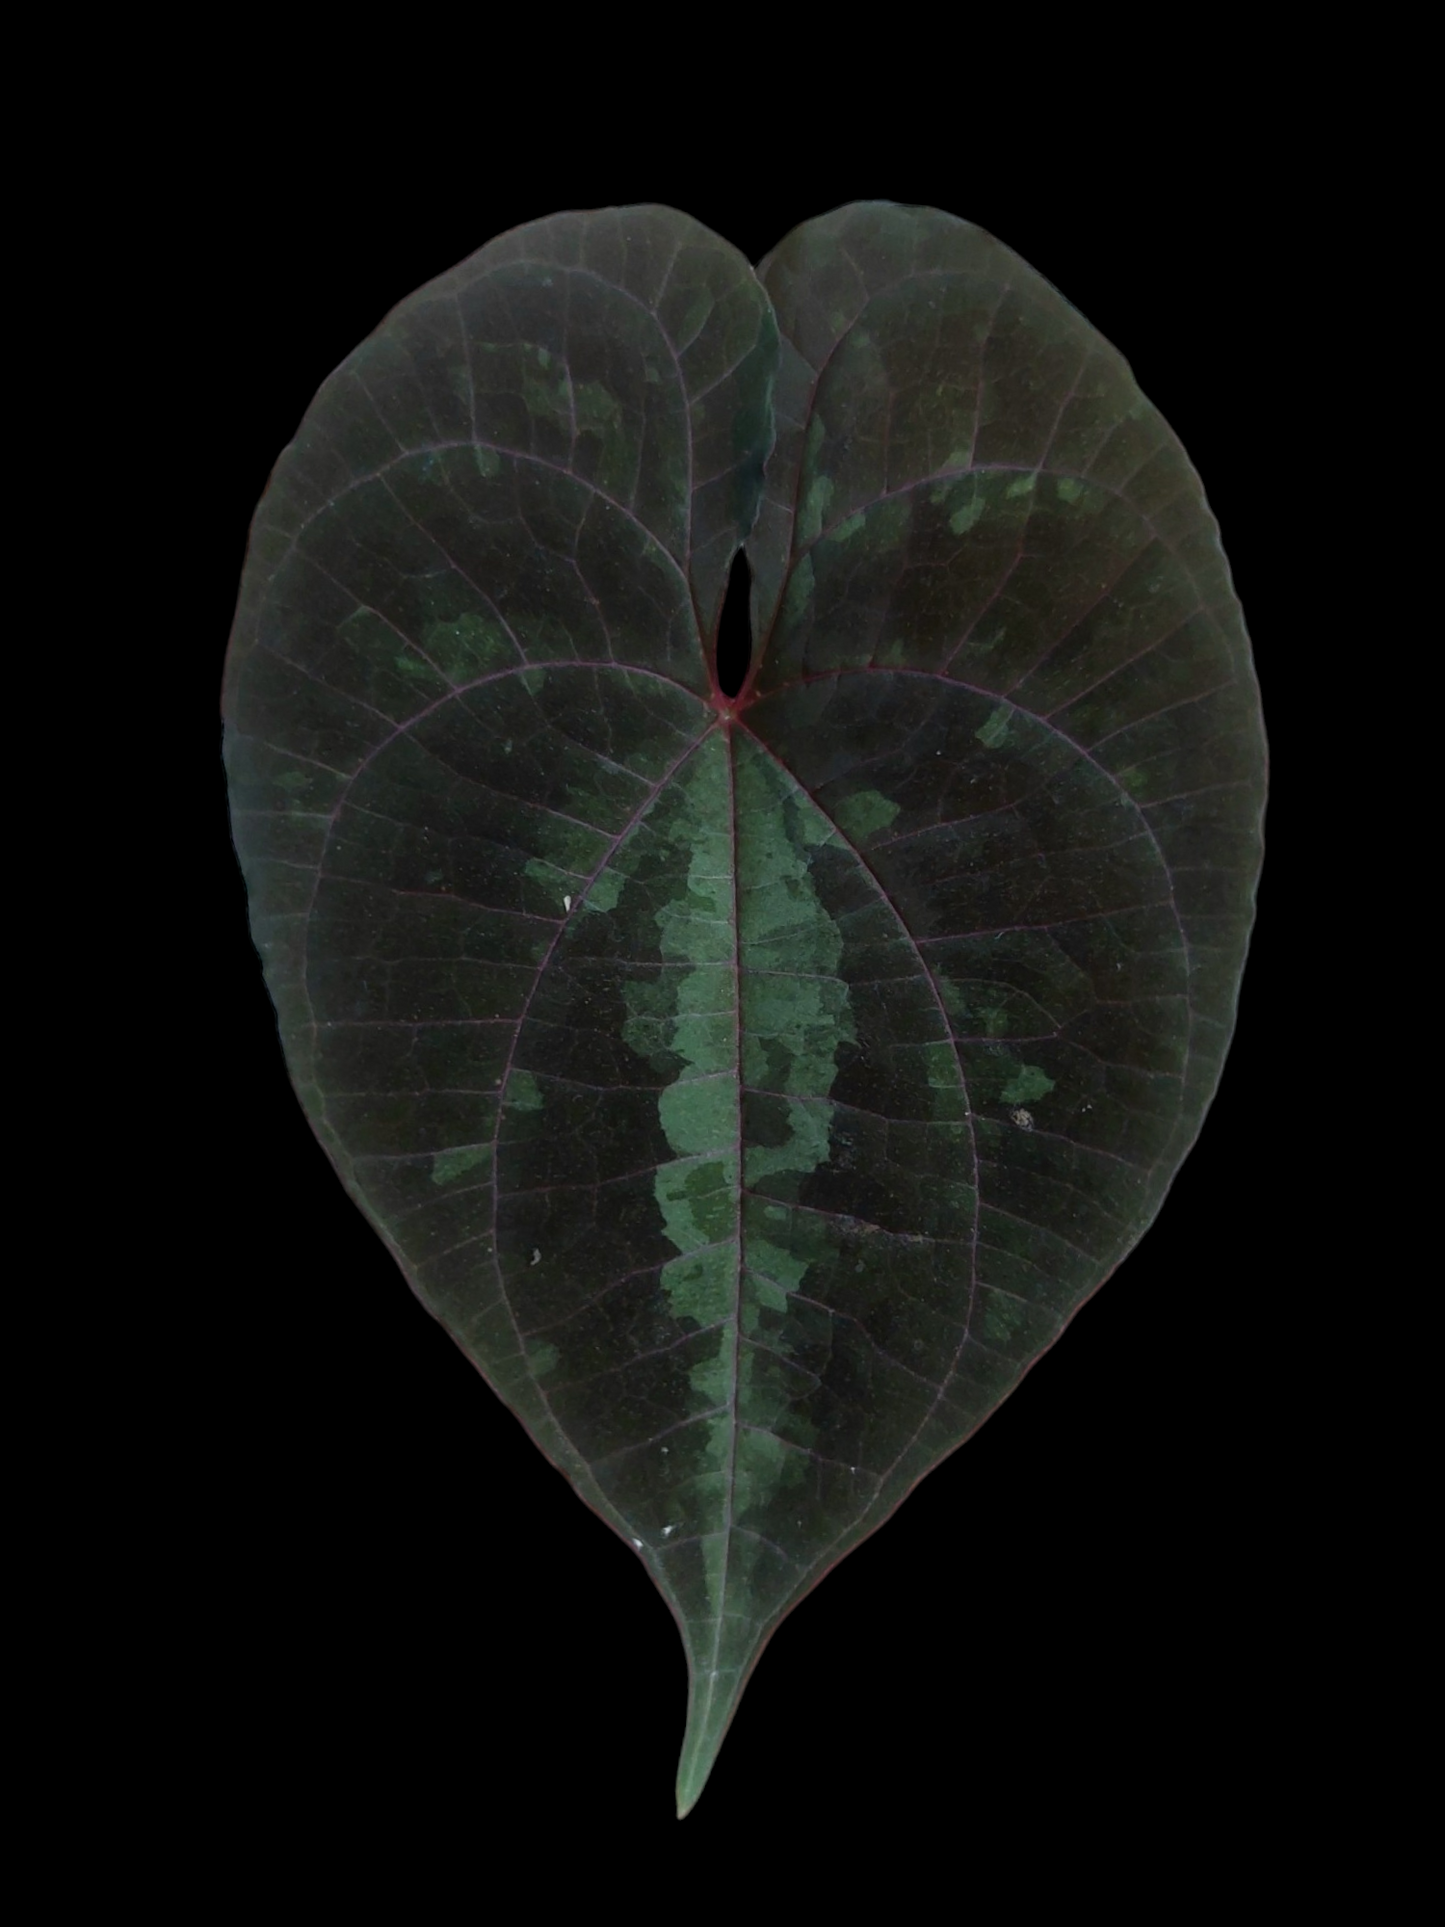 Dioscorea Discolor Peru ecotypes (EXACT PLANT)